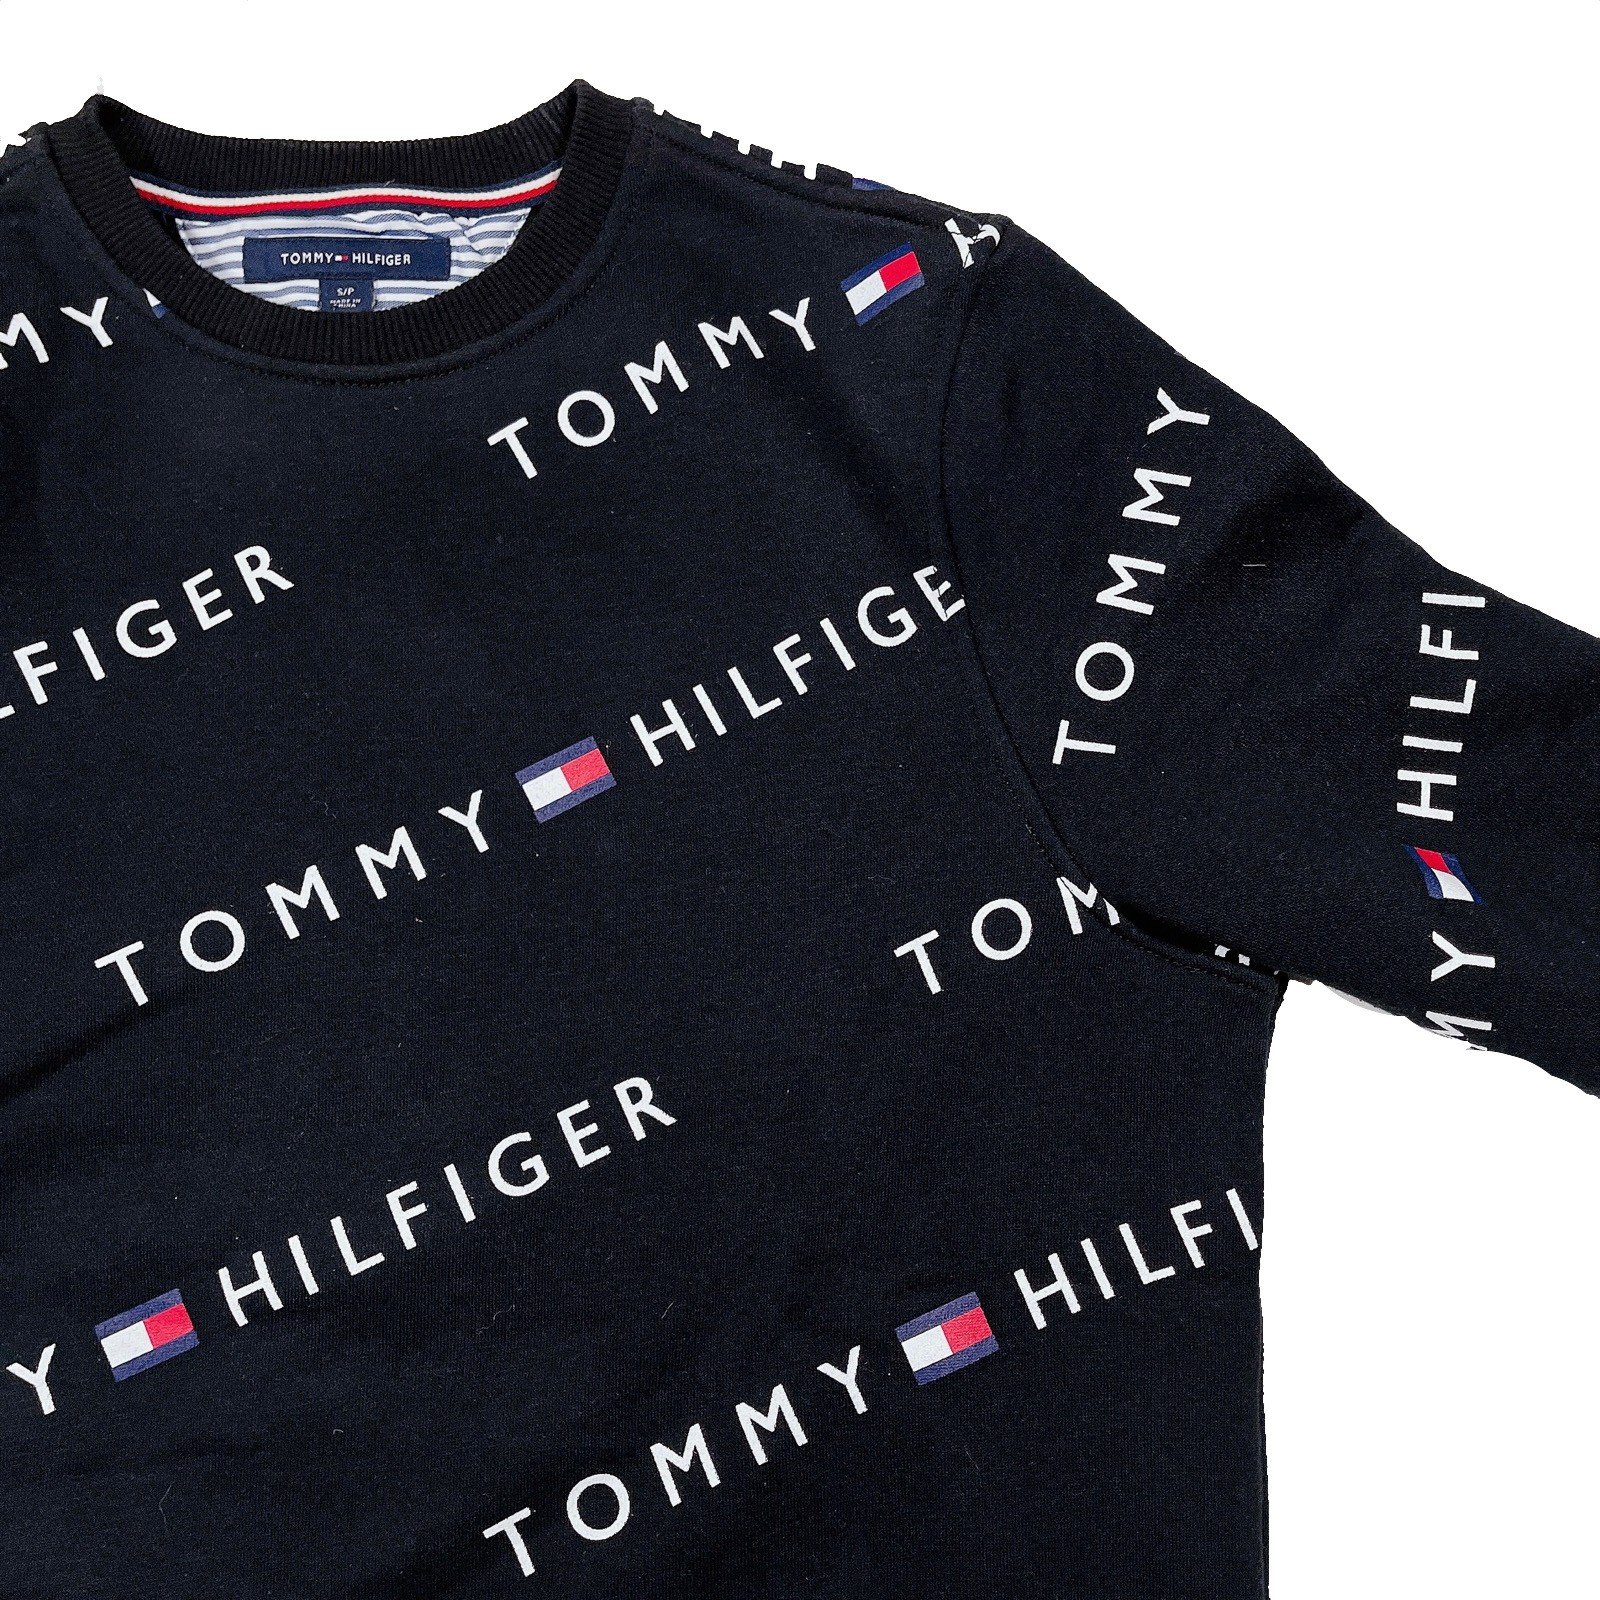 Ssize Tommy Hilfiger logo sweat